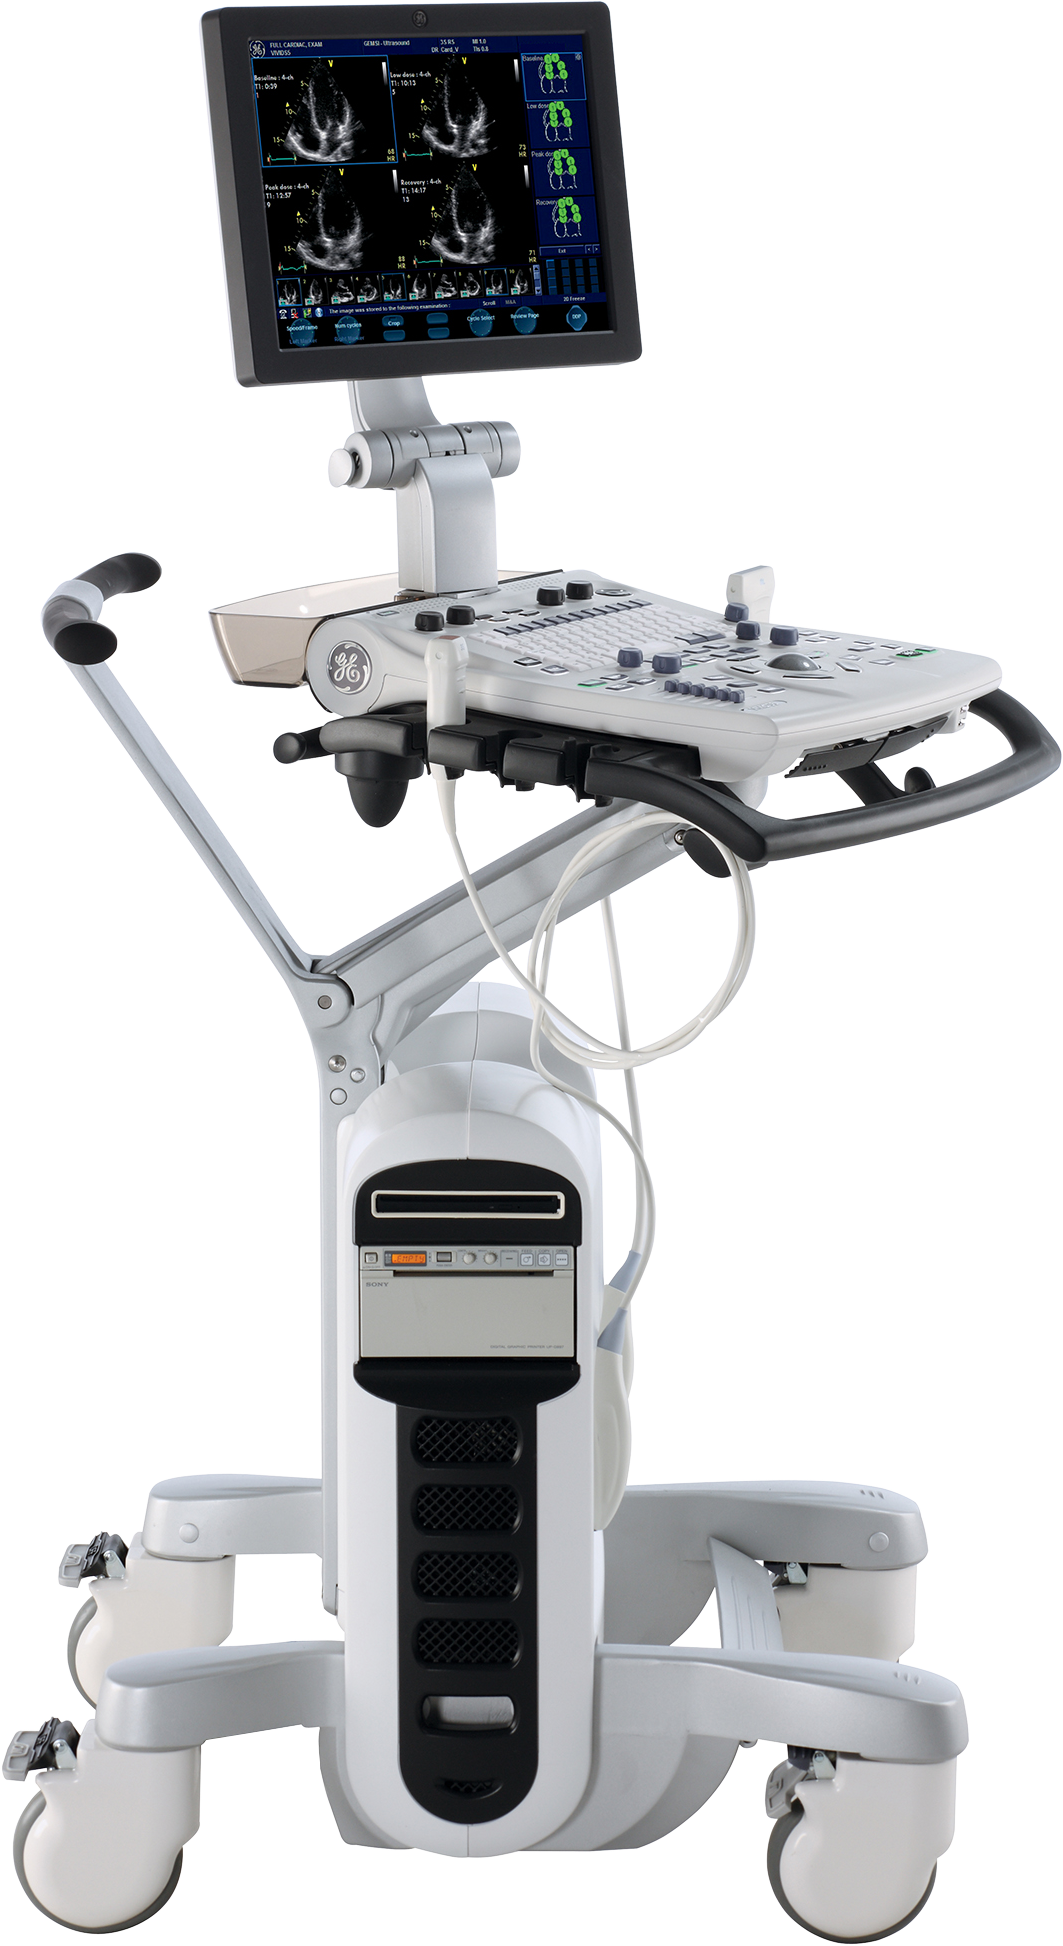 Ультразвуковой сканер Vivid S5 GE Healthcare 1